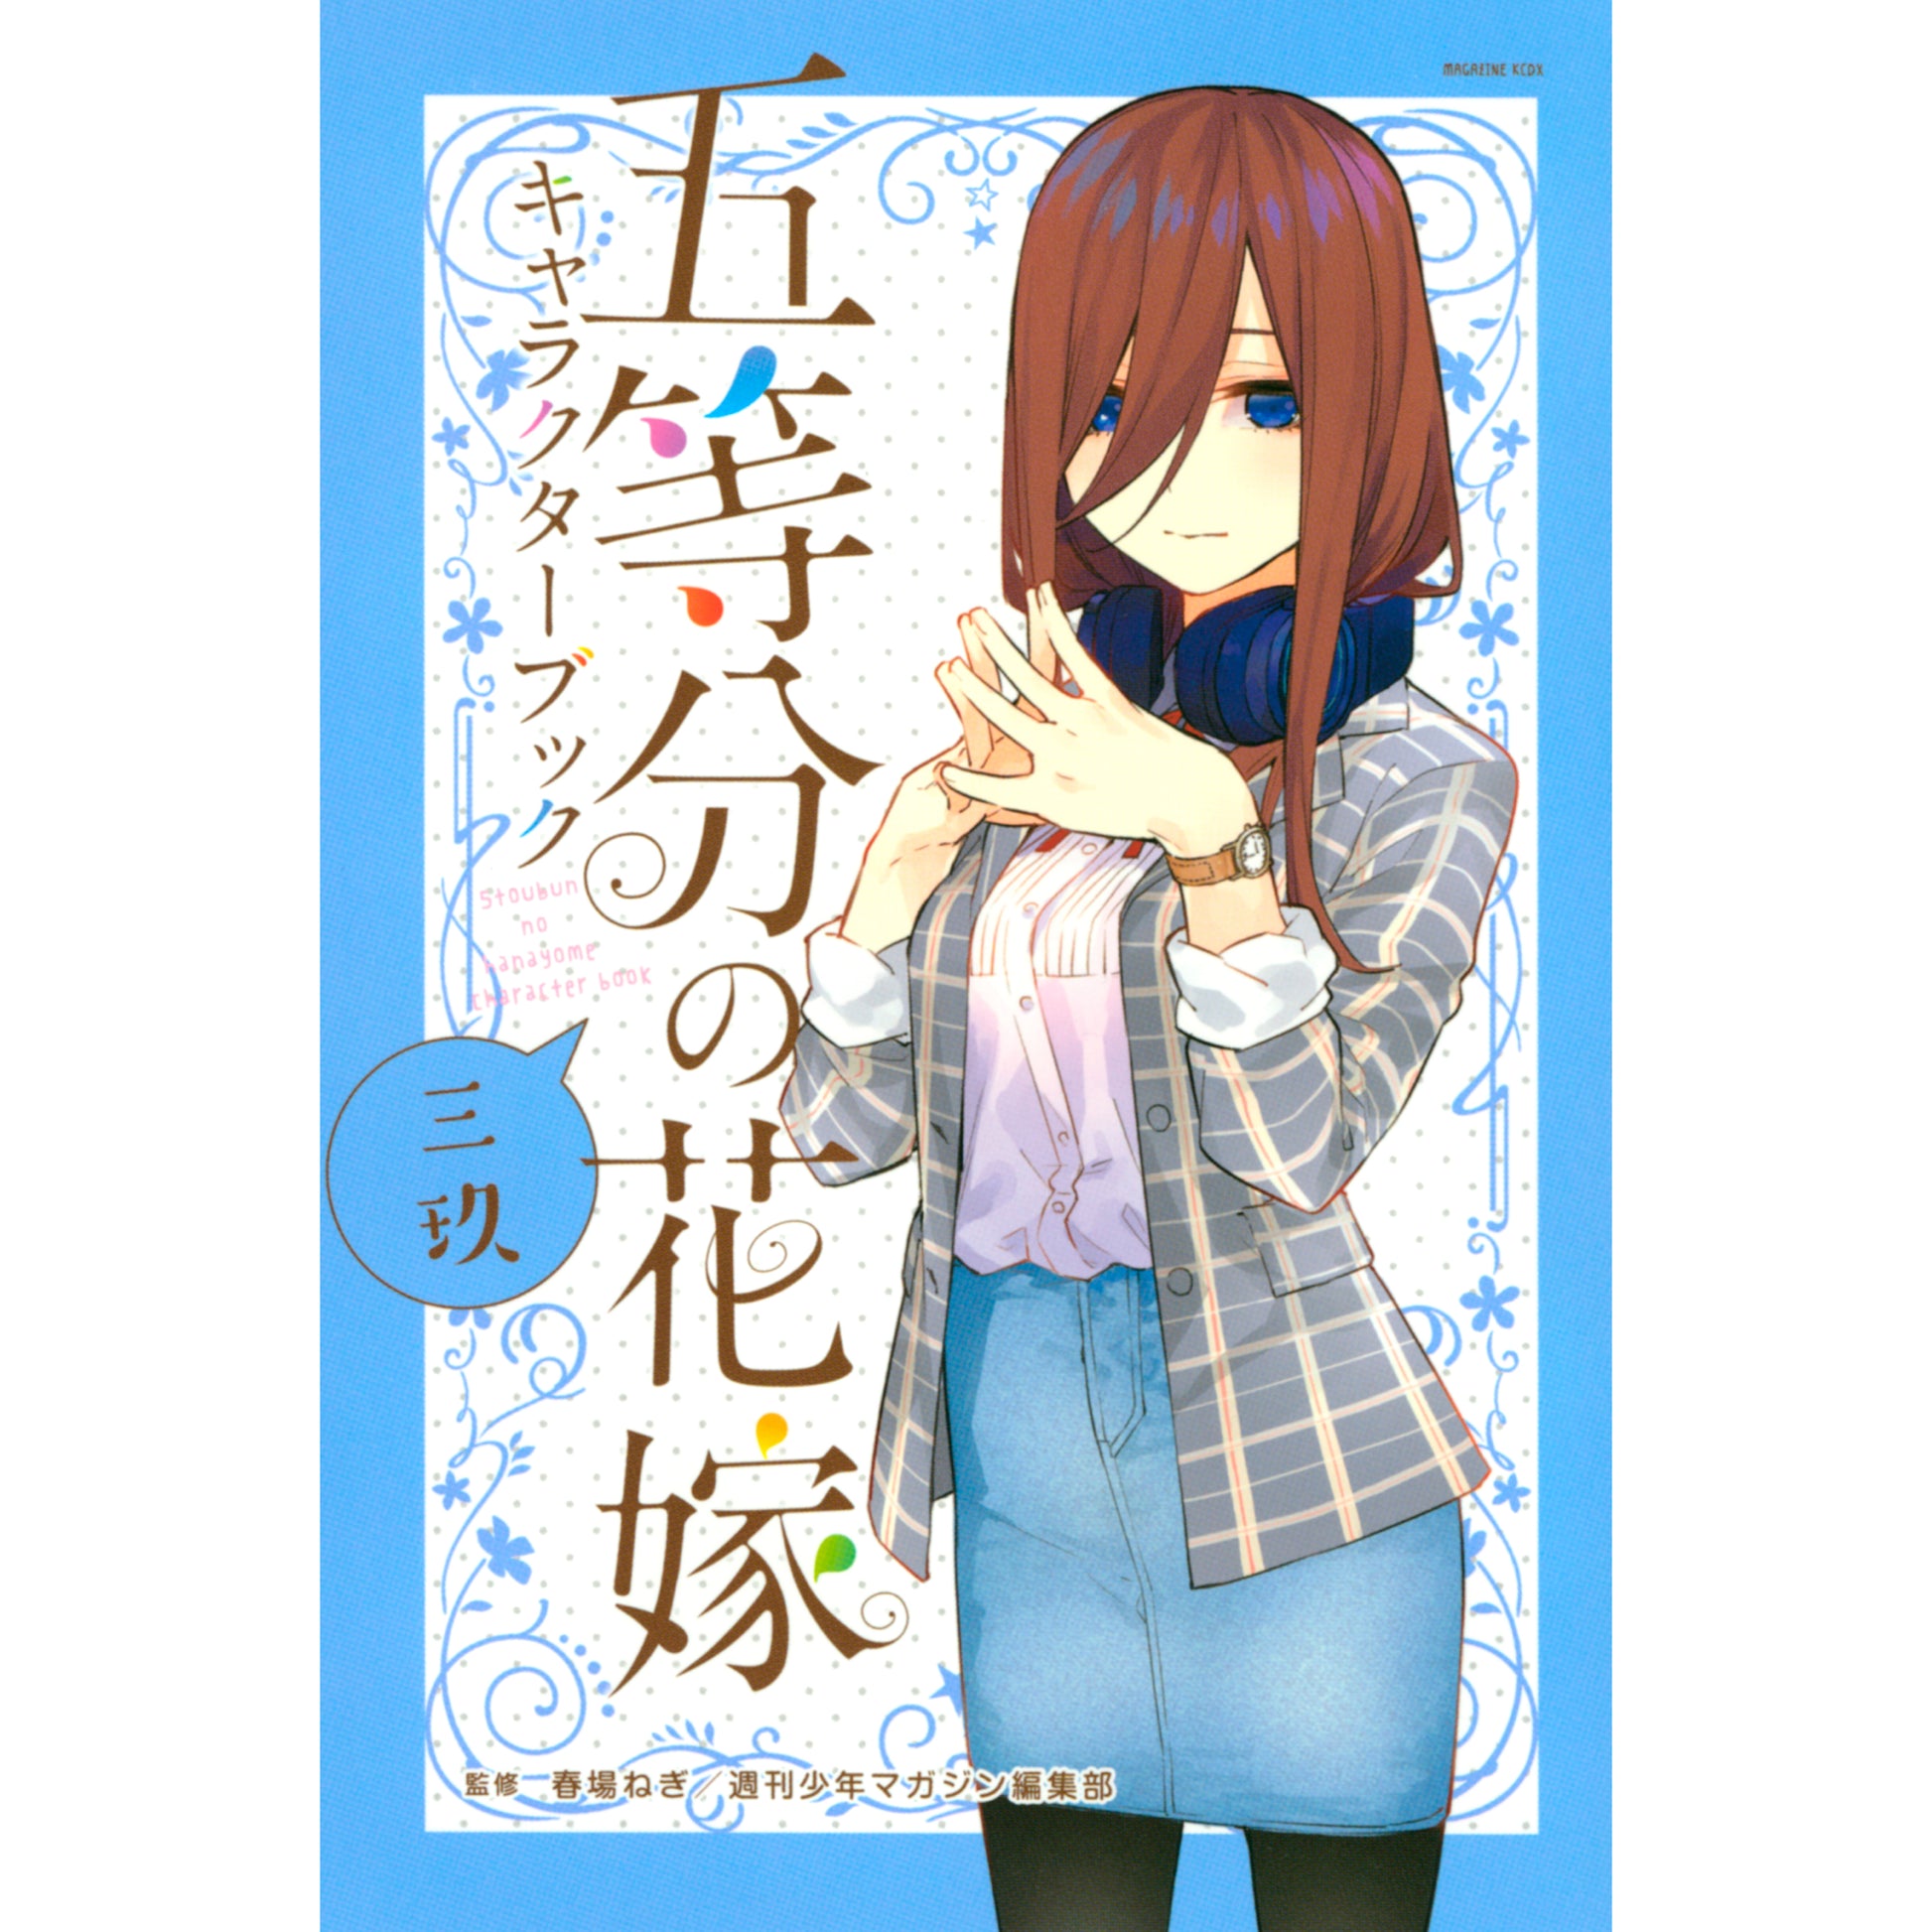 Anime The Quintessential Quintuplets Novelize (Novel) Manga